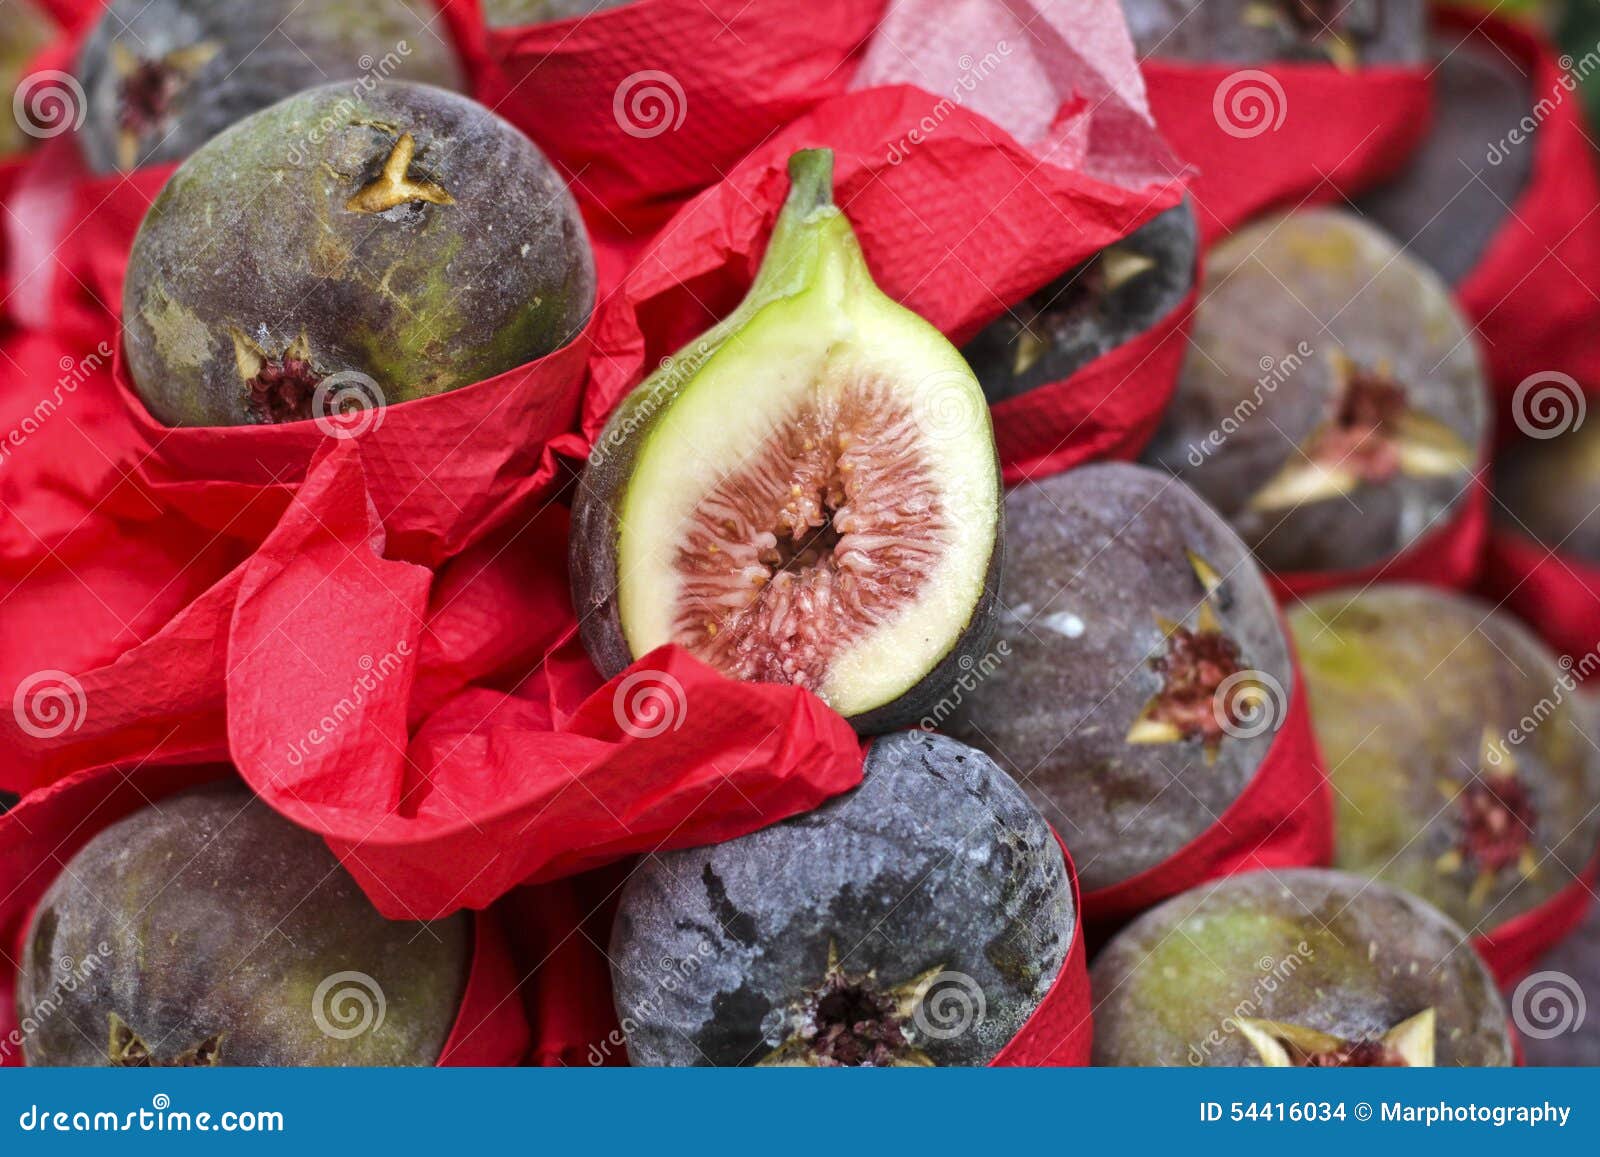 exotic fruit purple figs stock photo - image: 54416034